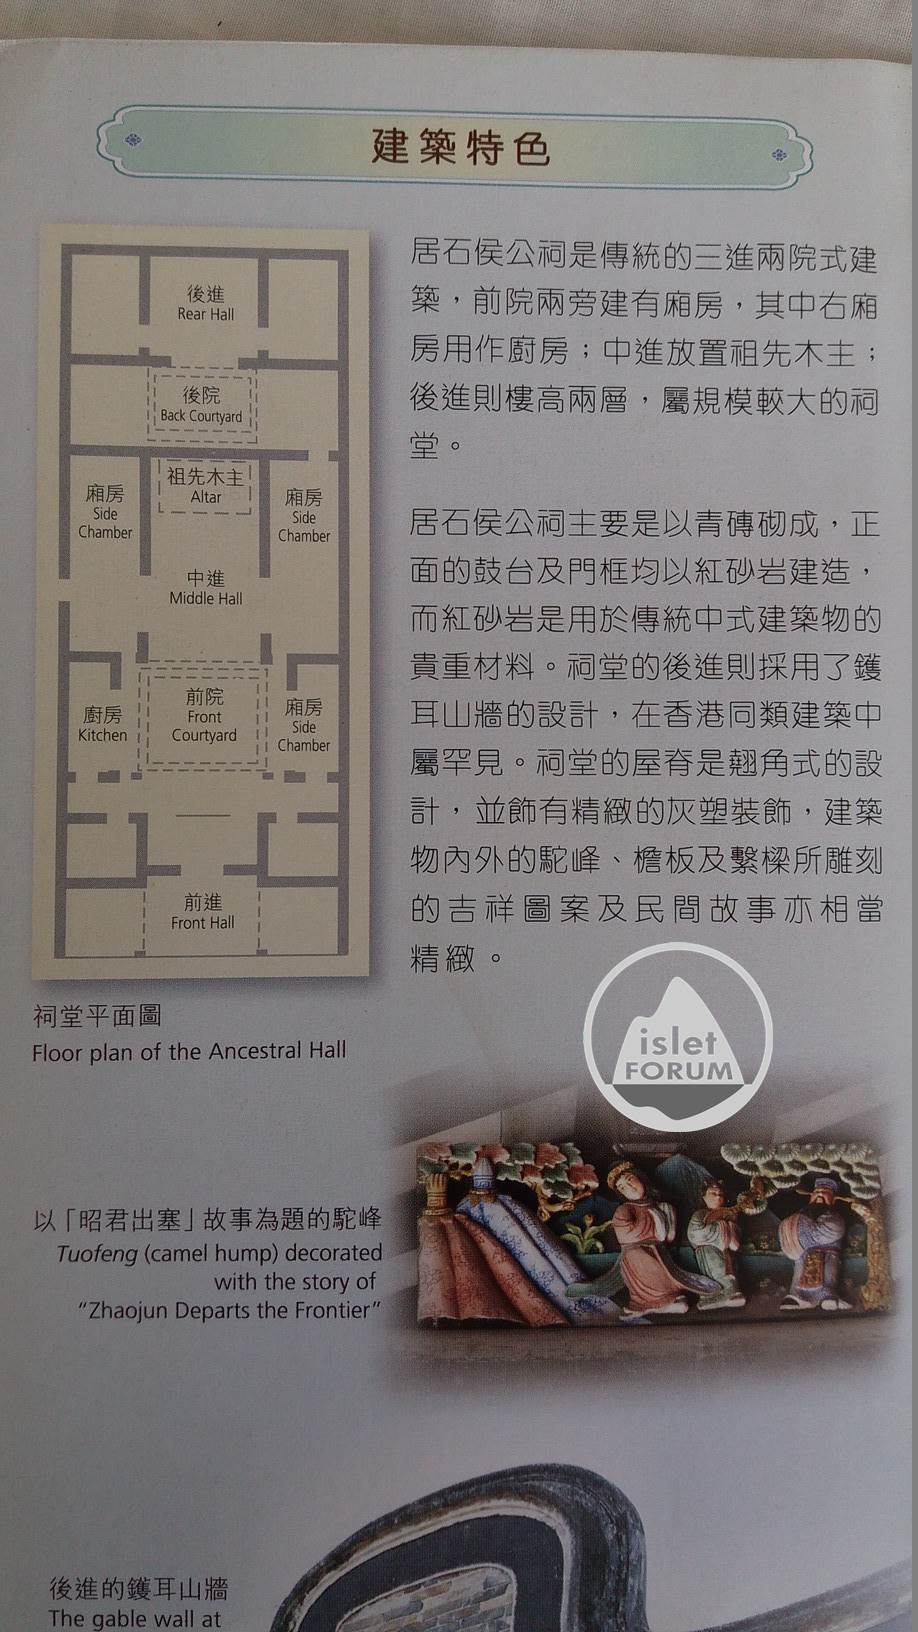 居石侯公祠hau kui shek ancestral hall (1).jpg